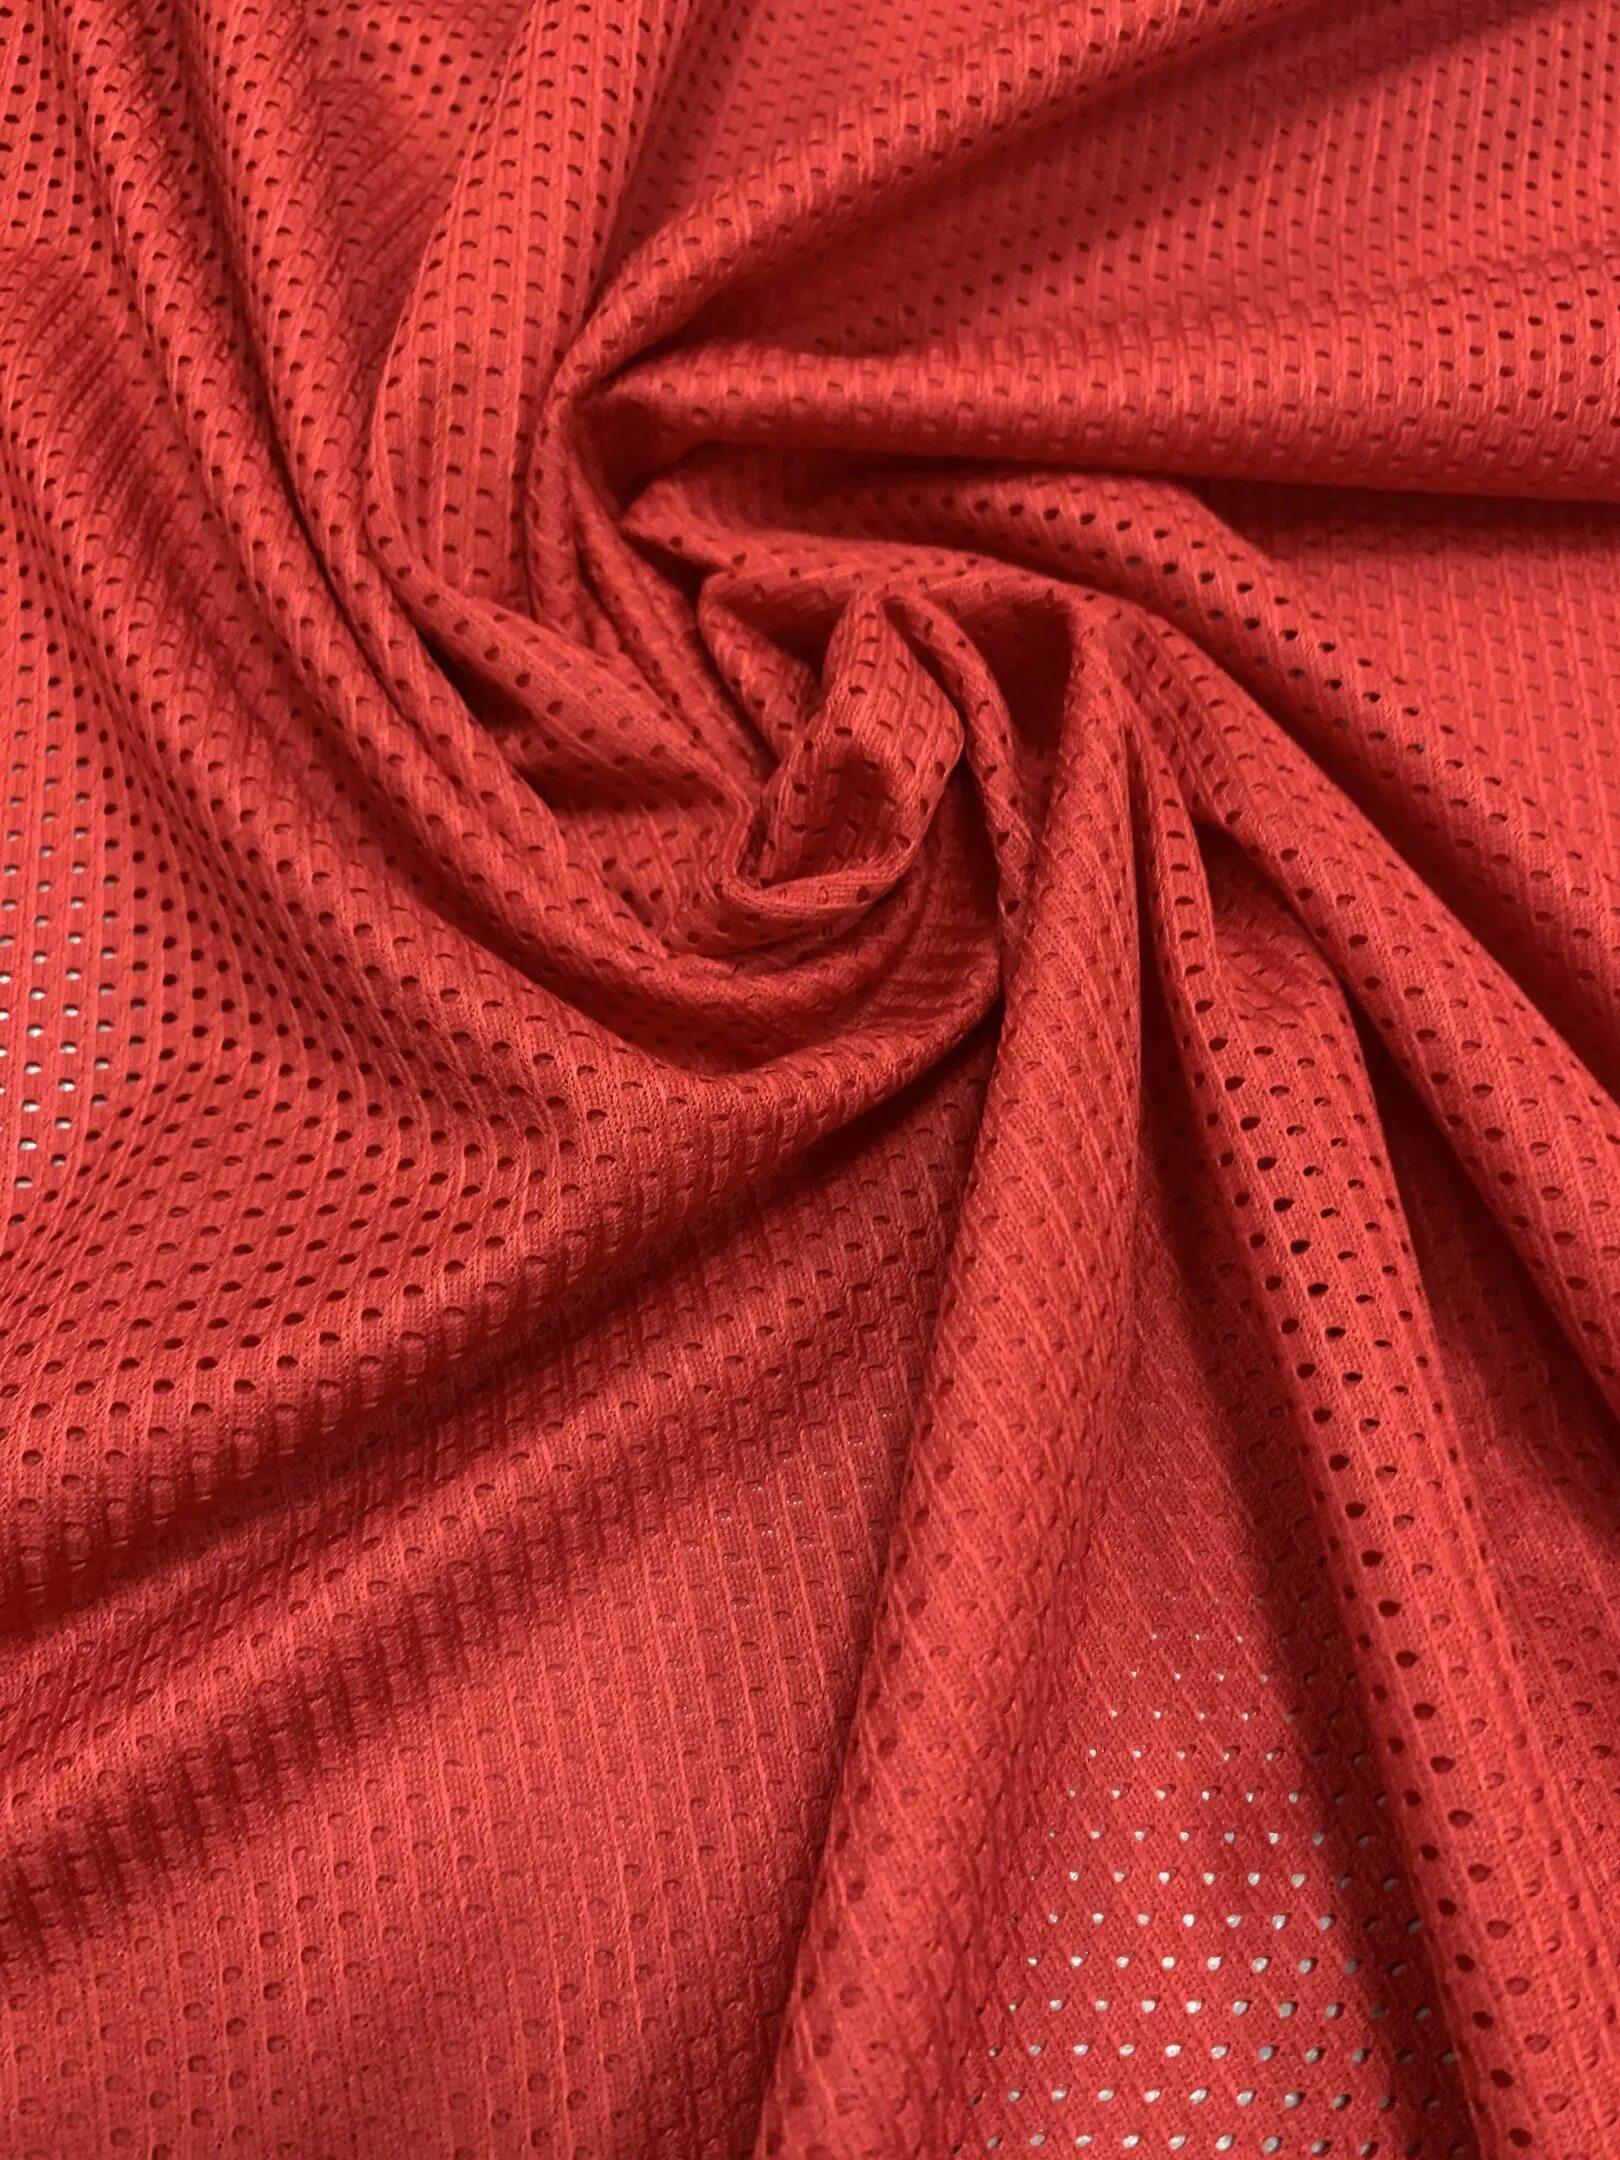 Ткань найка. Ткань сетка. Красная сетка ткань. Ткань сеточка. Подкладочная ткань сетка.